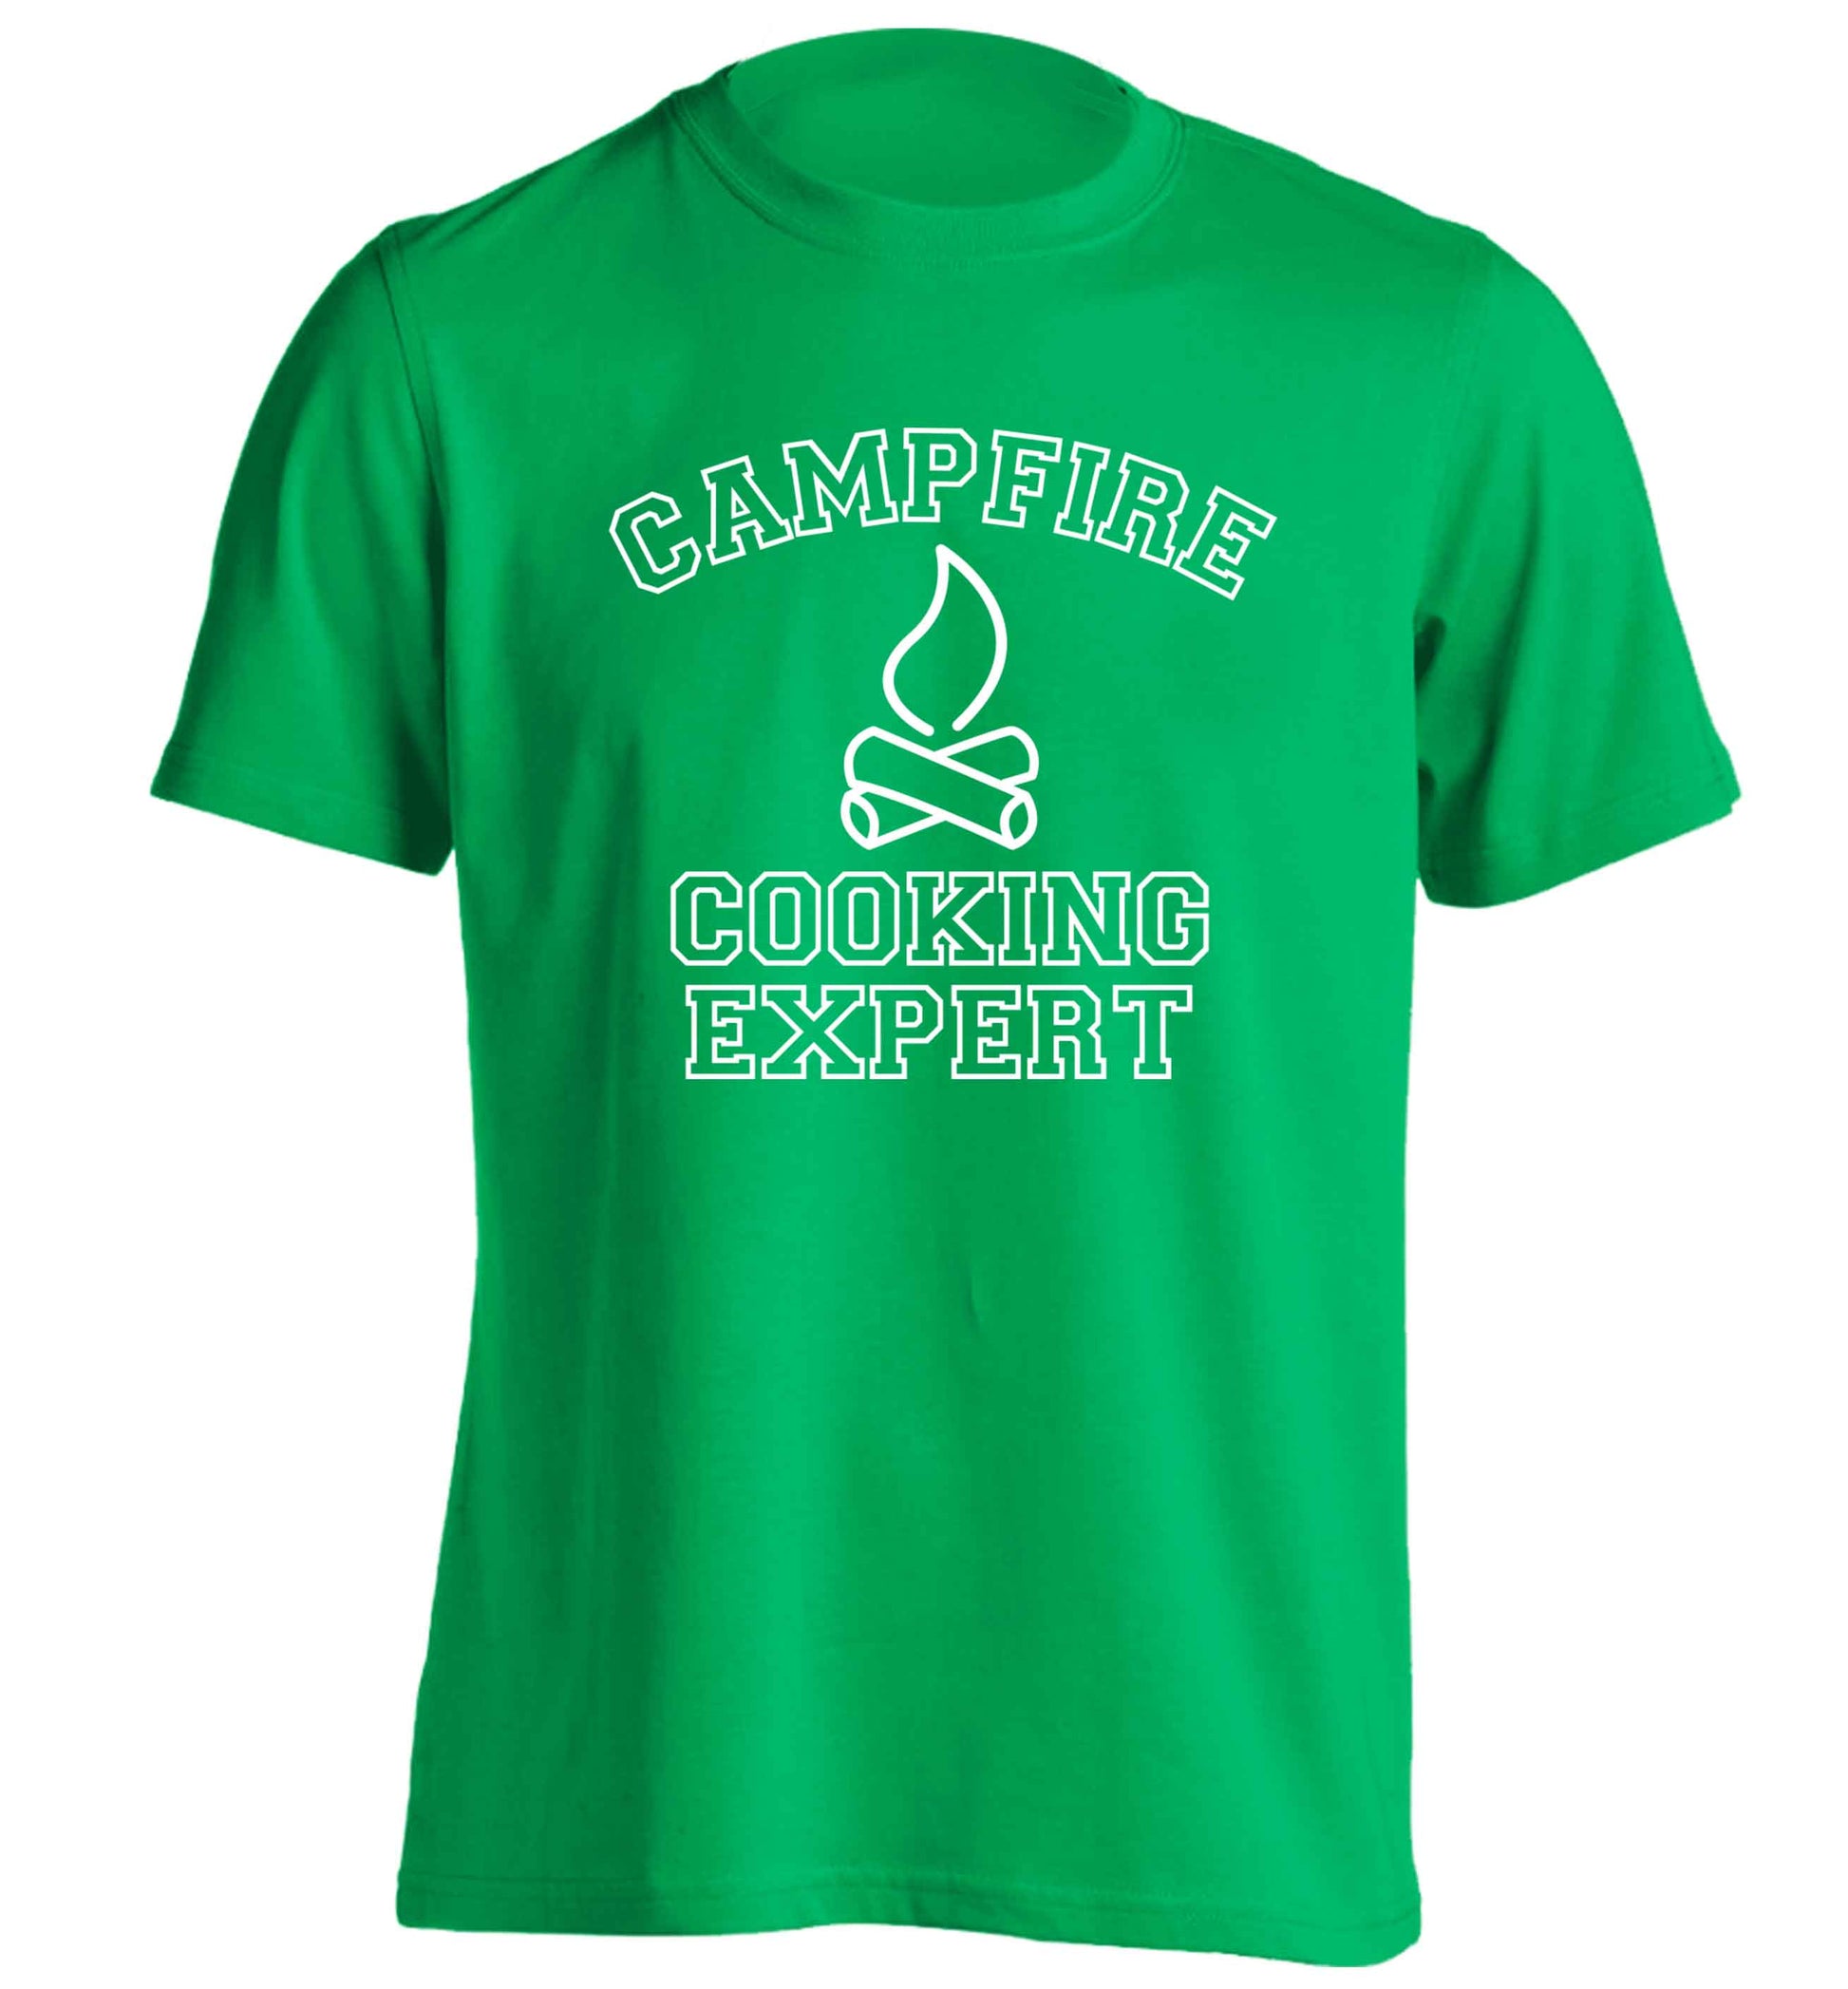 Campfire cooking expert adults unisex green Tshirt 2XL